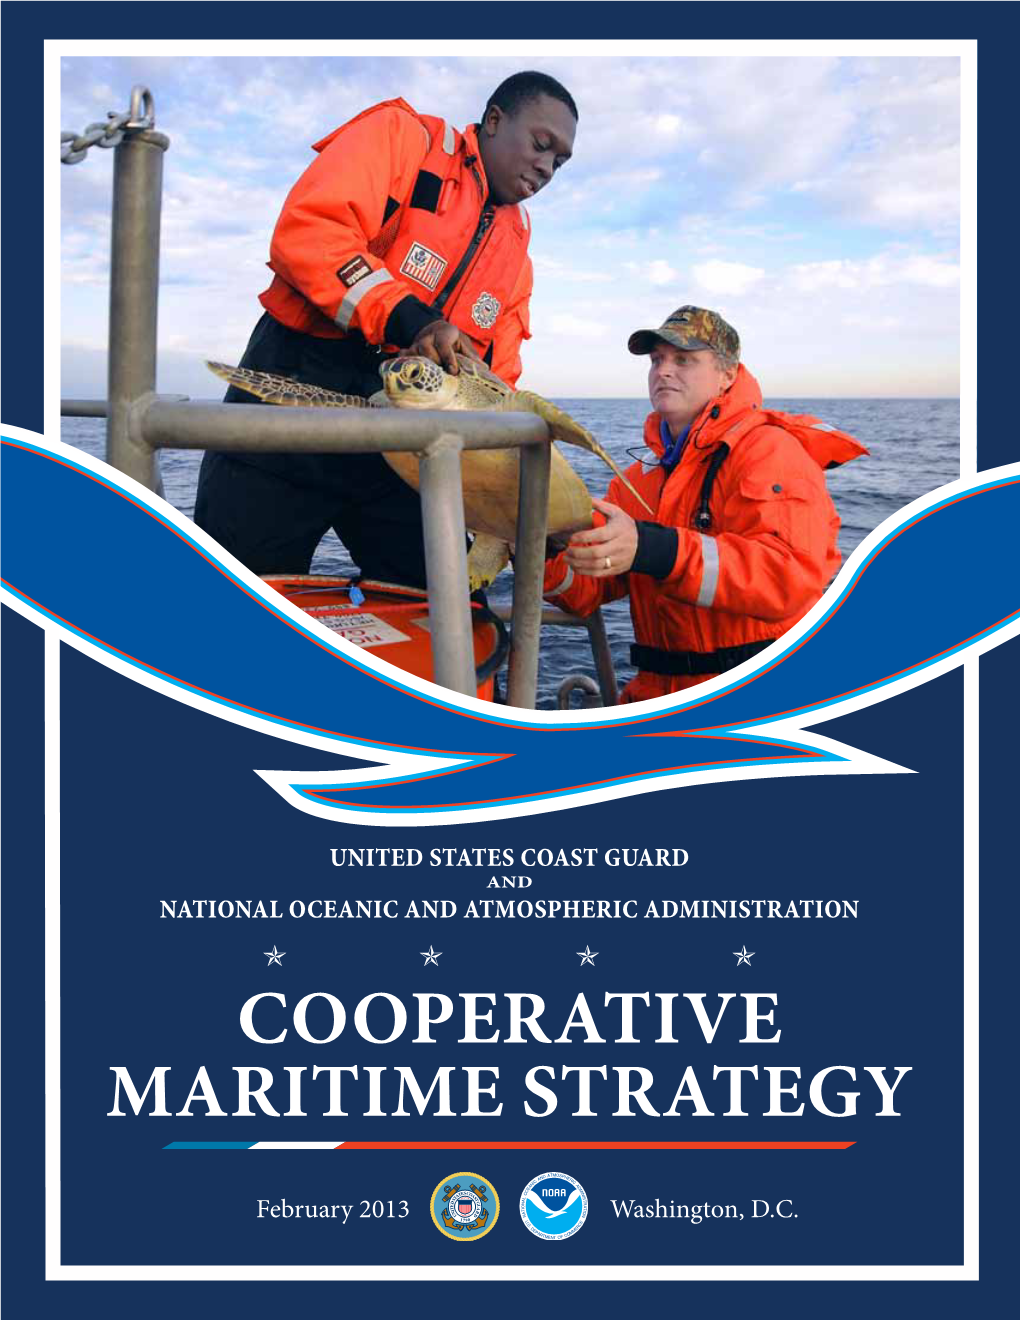 Coast Guard Cooperative Maritime Strategy